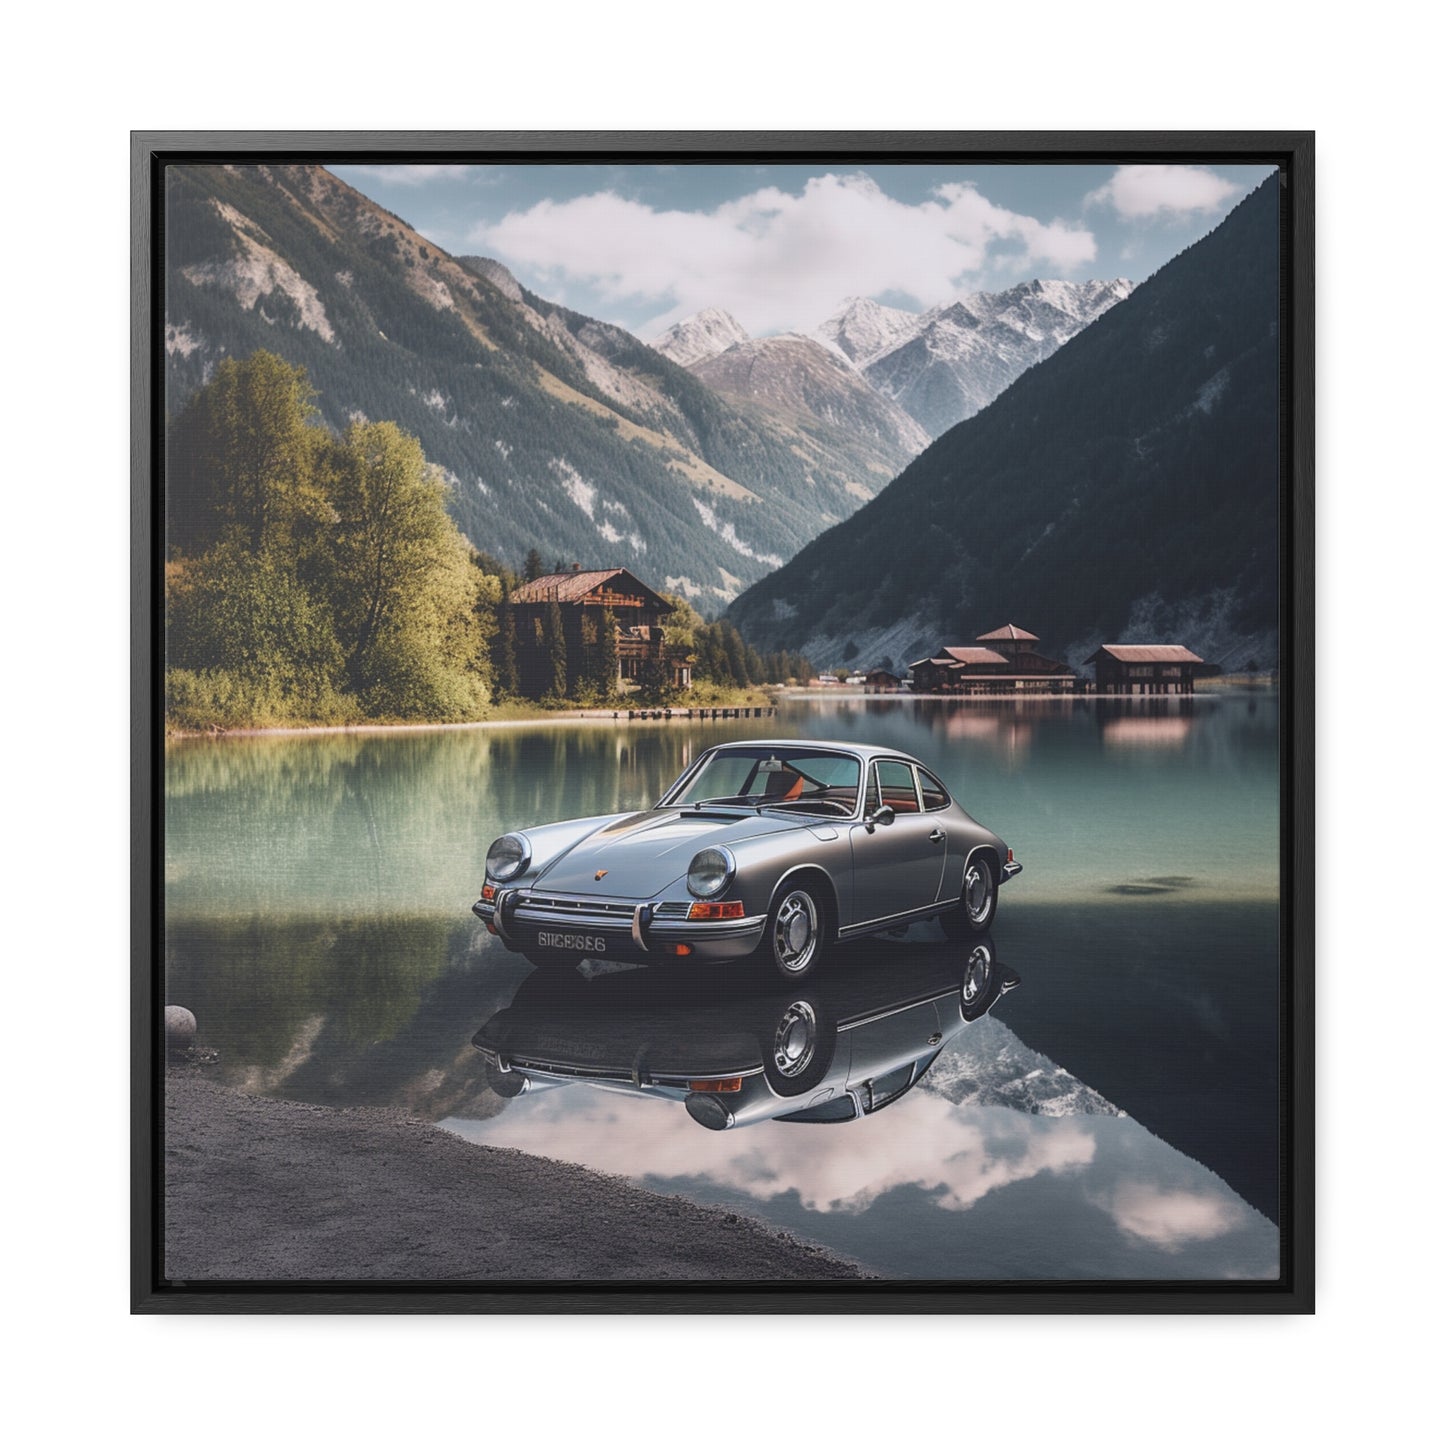 Gallery Canvas Wraps, Square Frame Porsche Lake 2